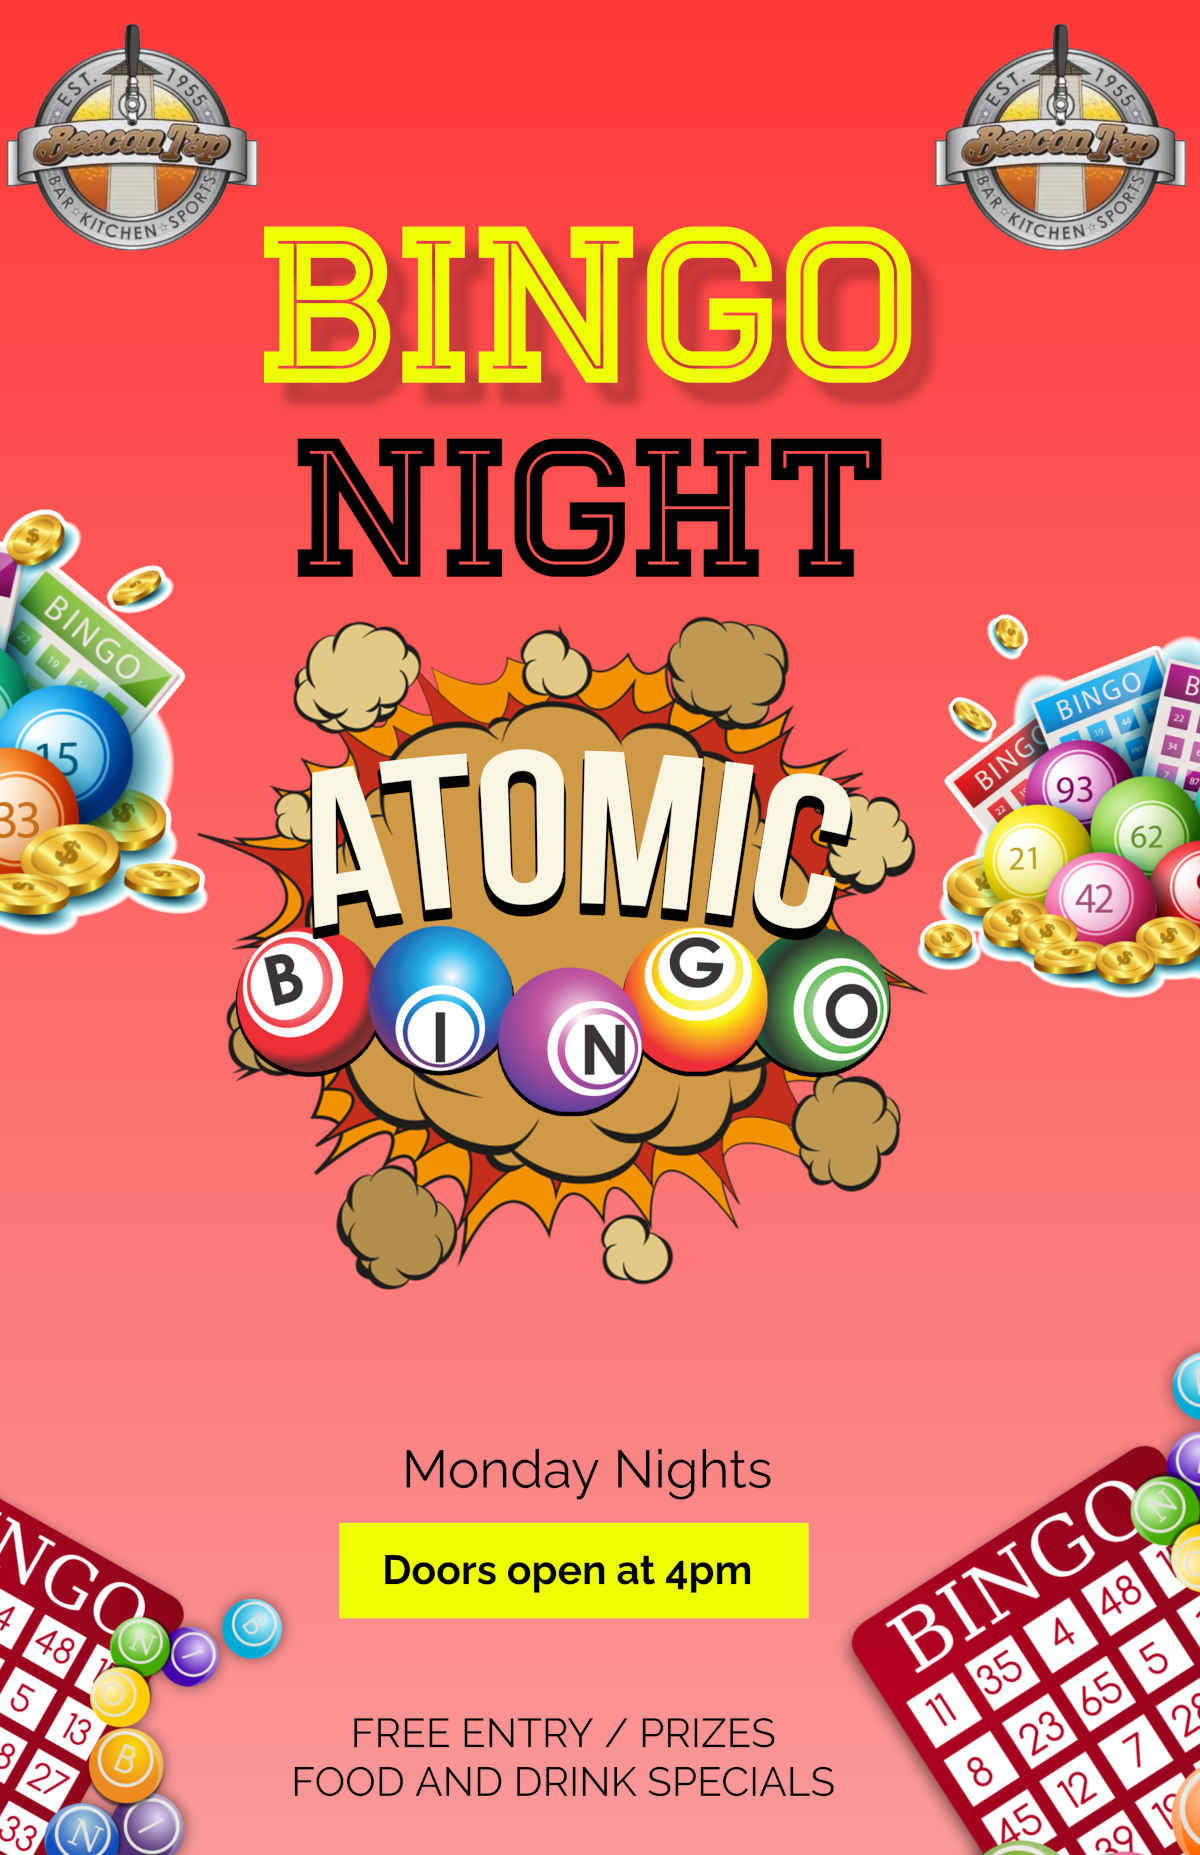 Bingo night flyer